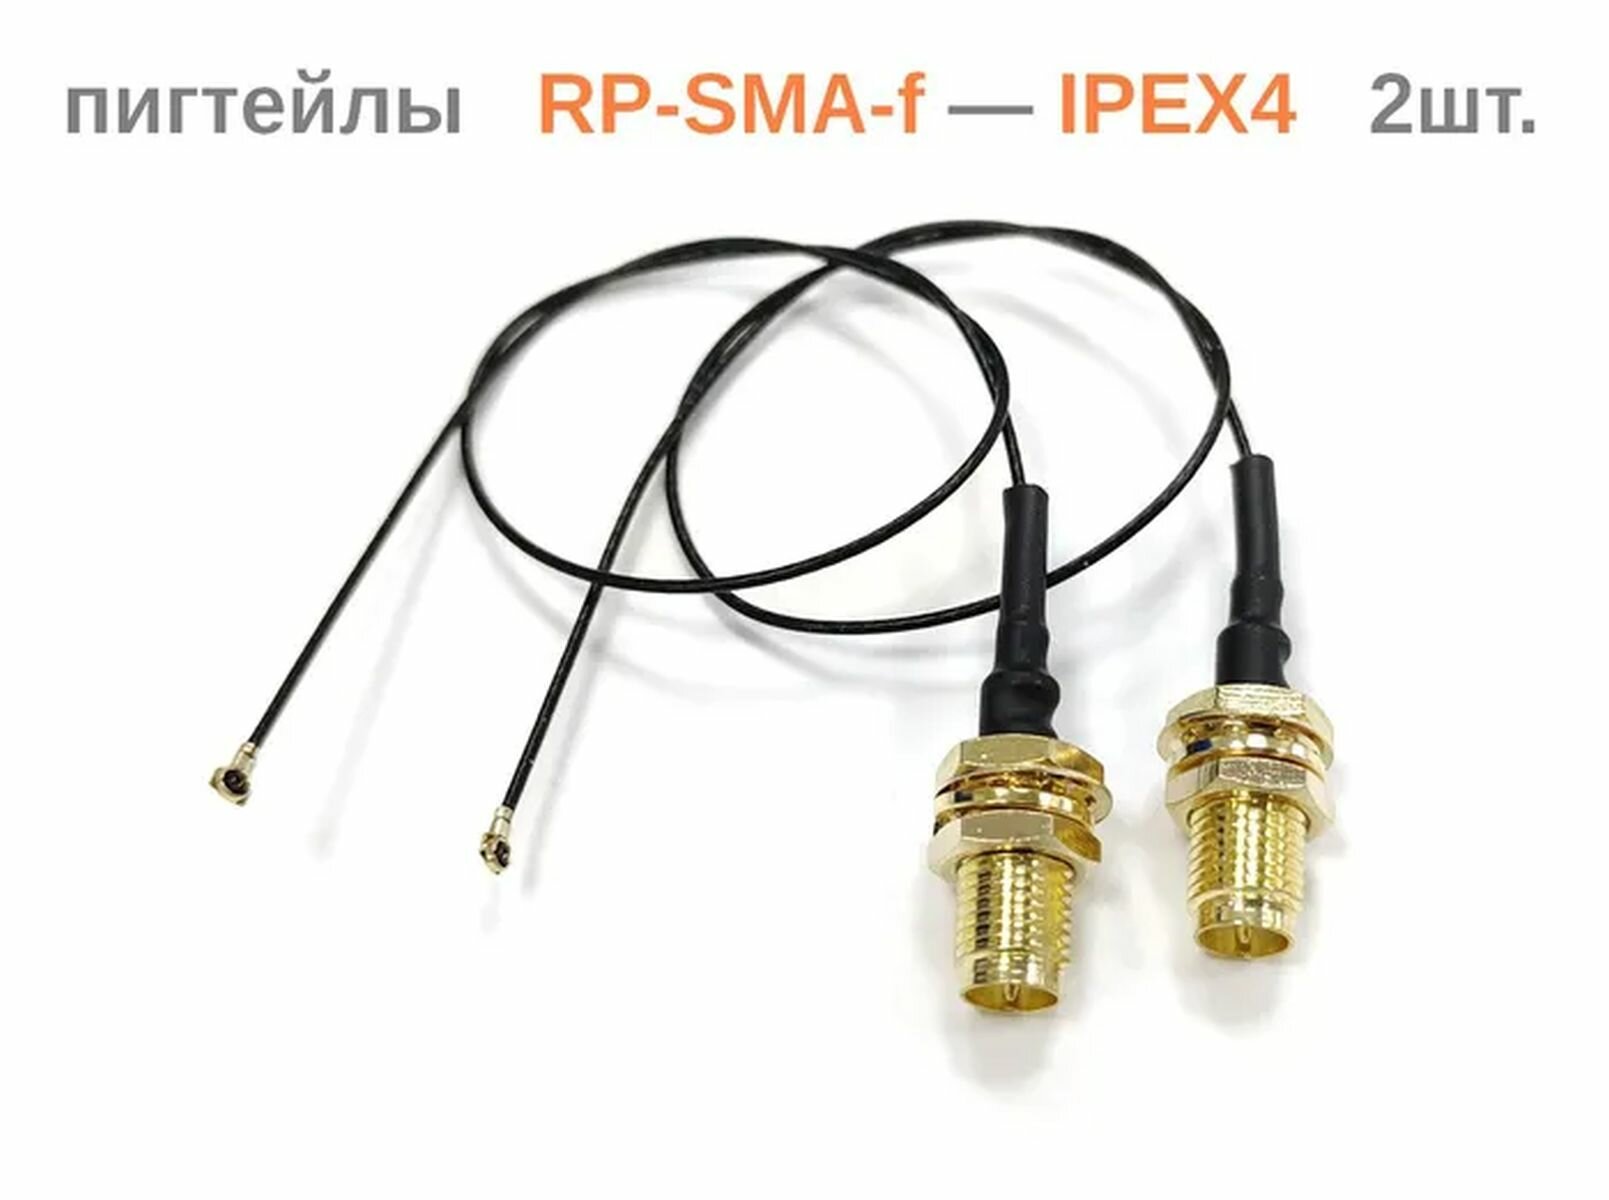 Комплект 2шт. адаптеров (пигтейлов) RP-SMA-f — U.FL MHF4 (I-PEX4) для Wi-Fi плат miniPCI-e